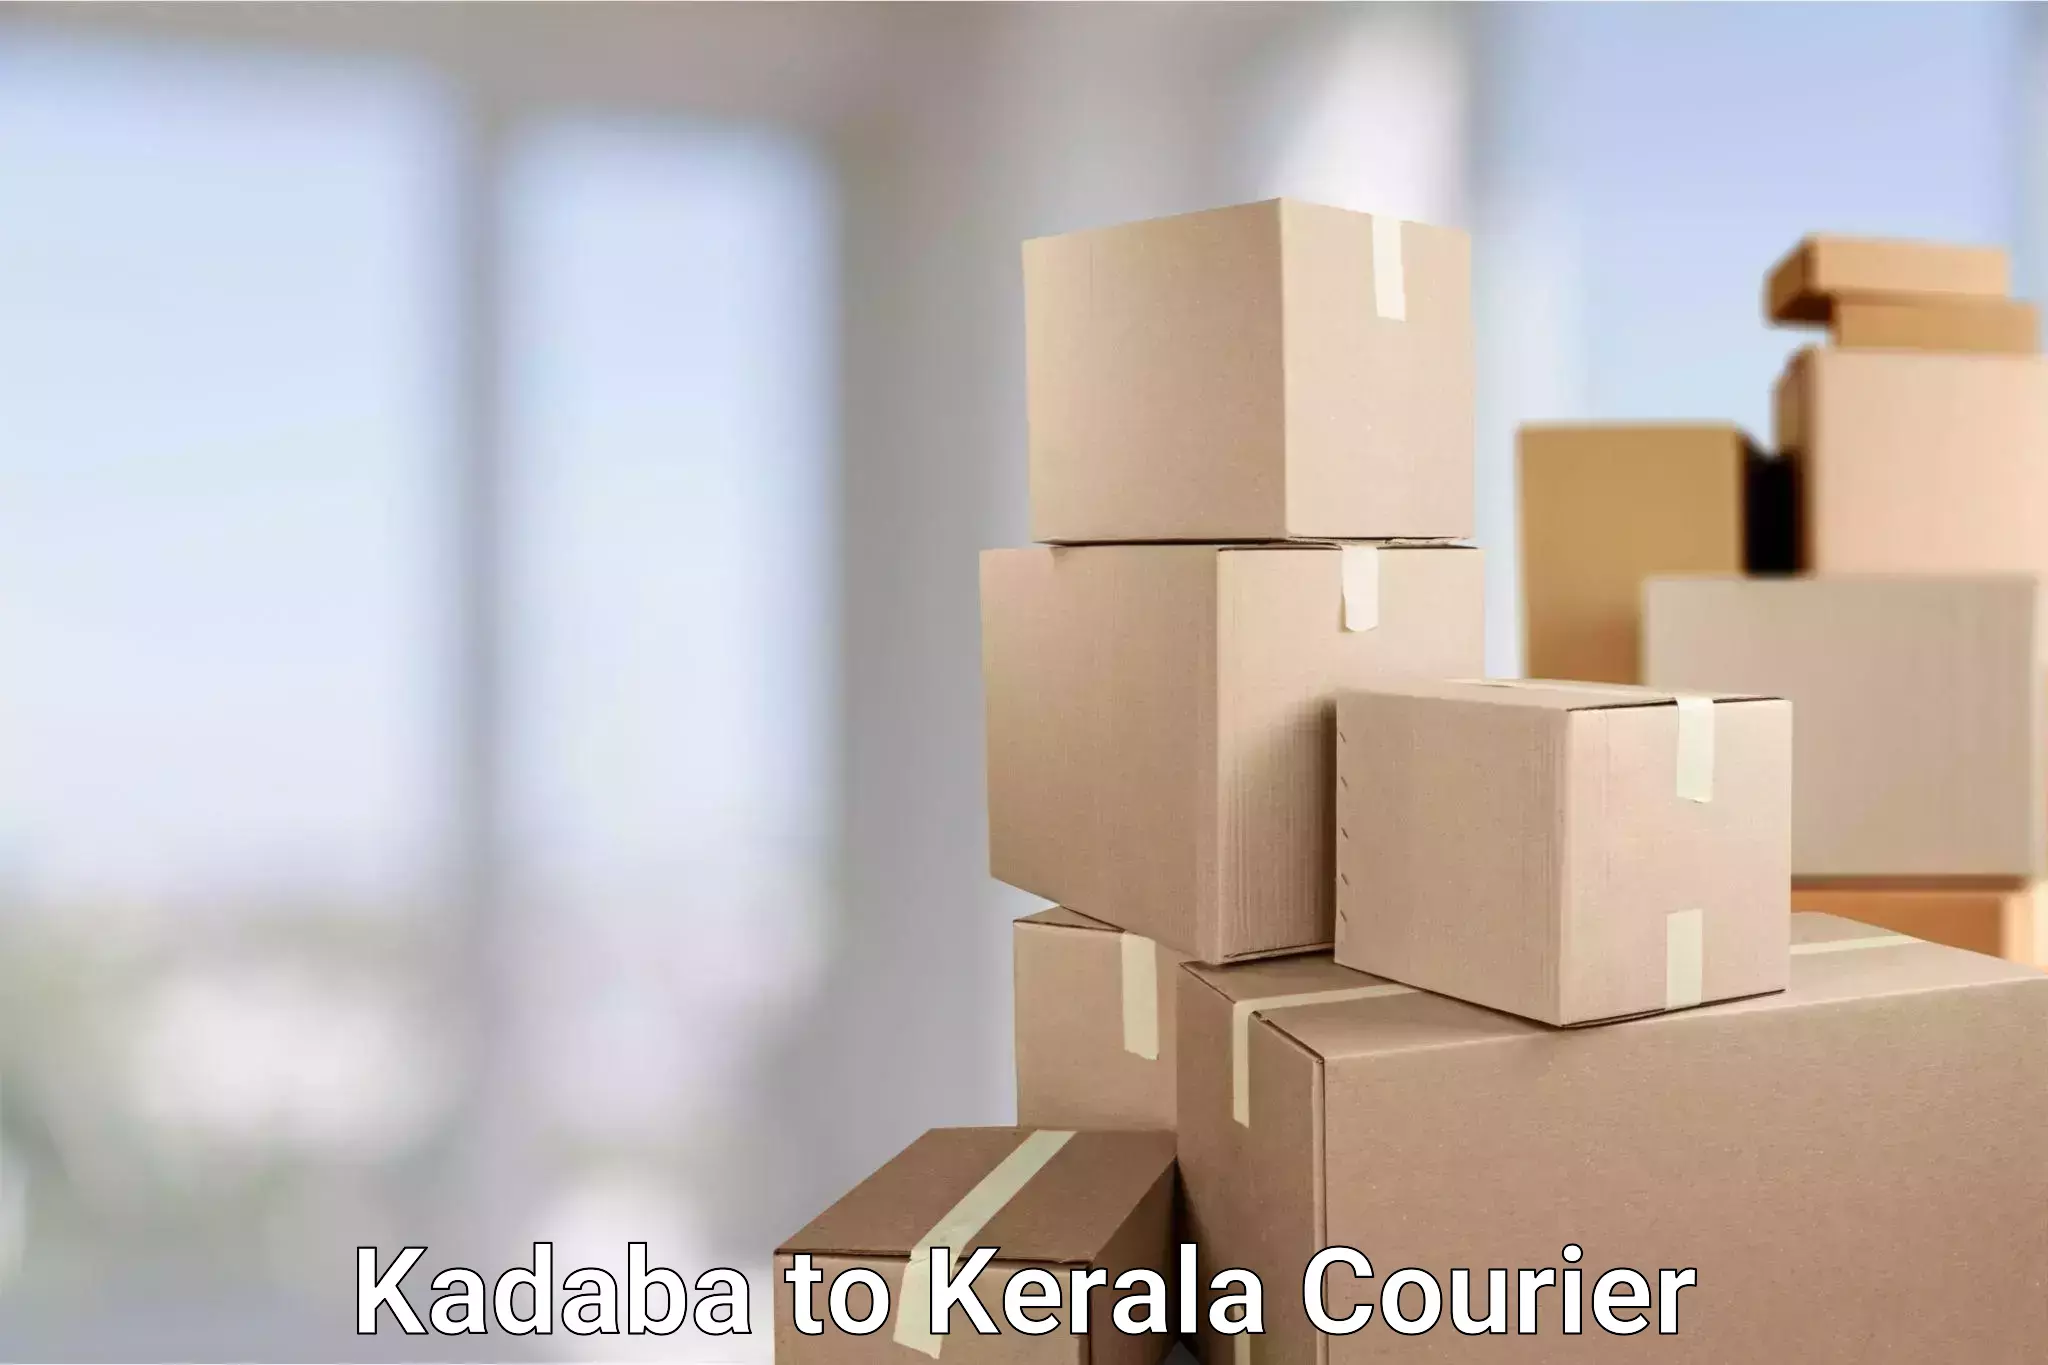 Speedy delivery service Kadaba to Kerala